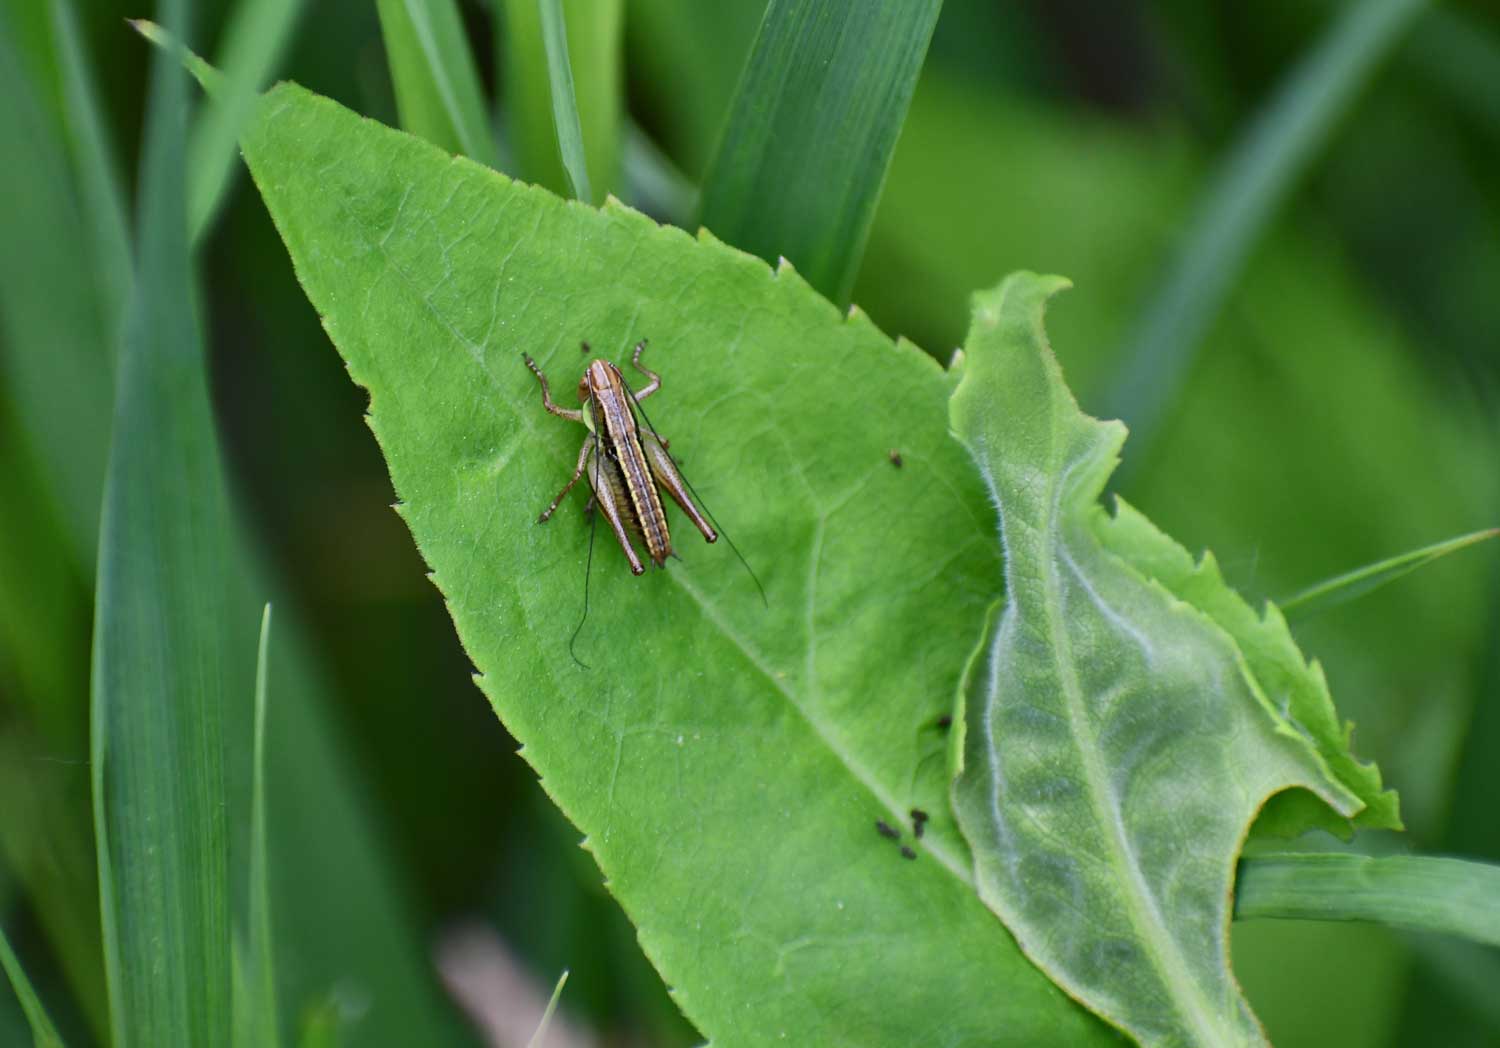 A cricket on a leaf.